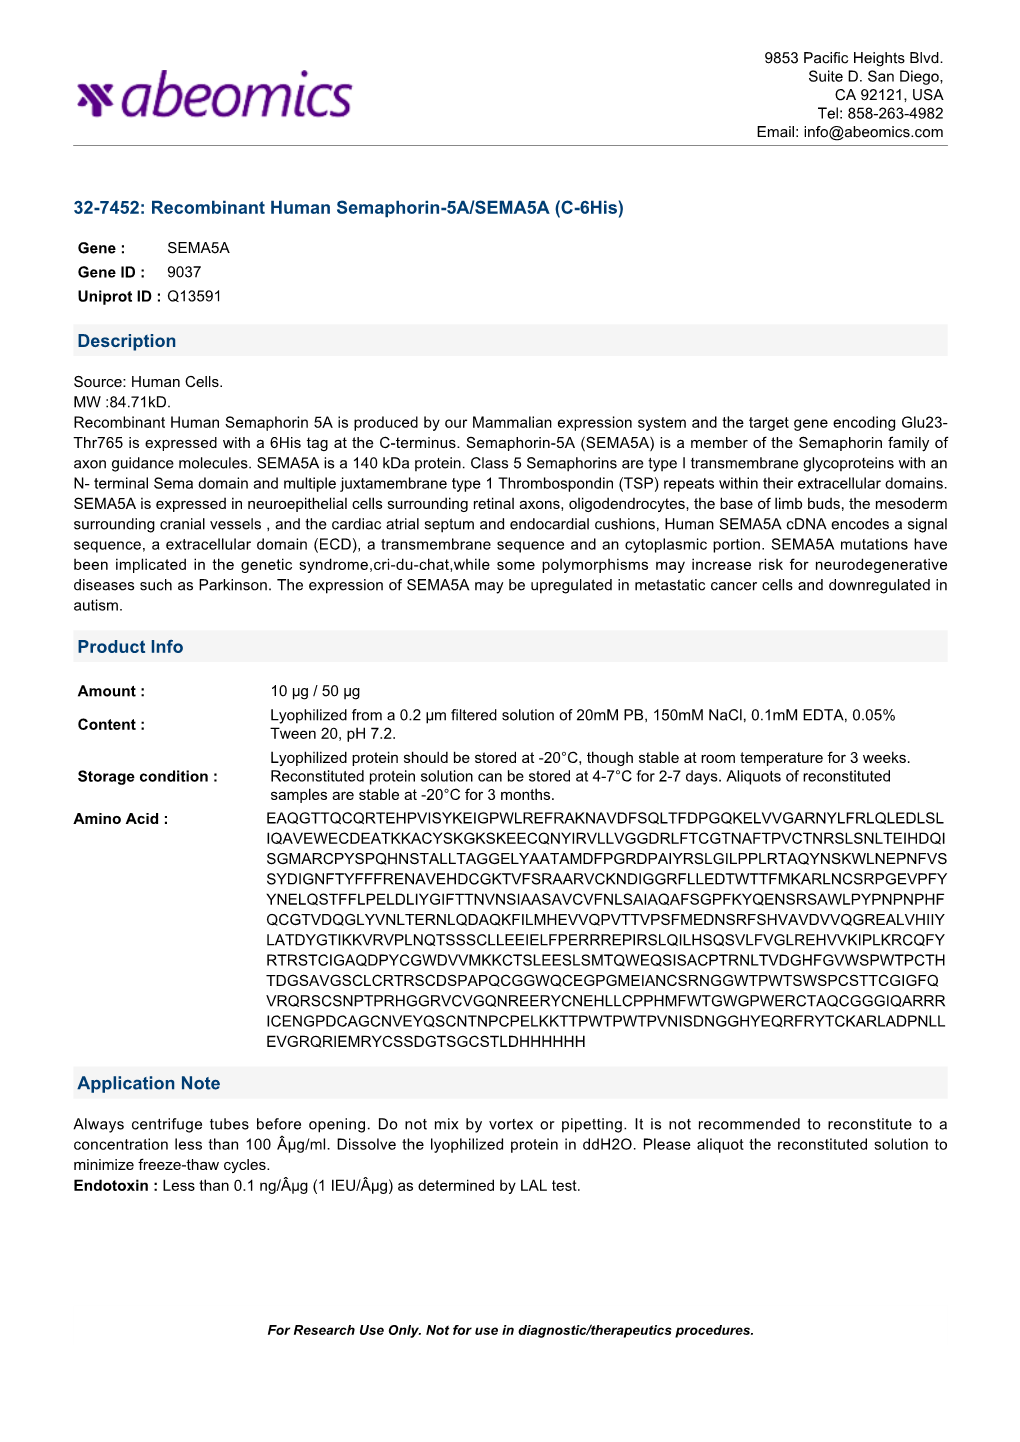 Recombinant Human Semaphorin-5A/SEMA5A (C-6His)